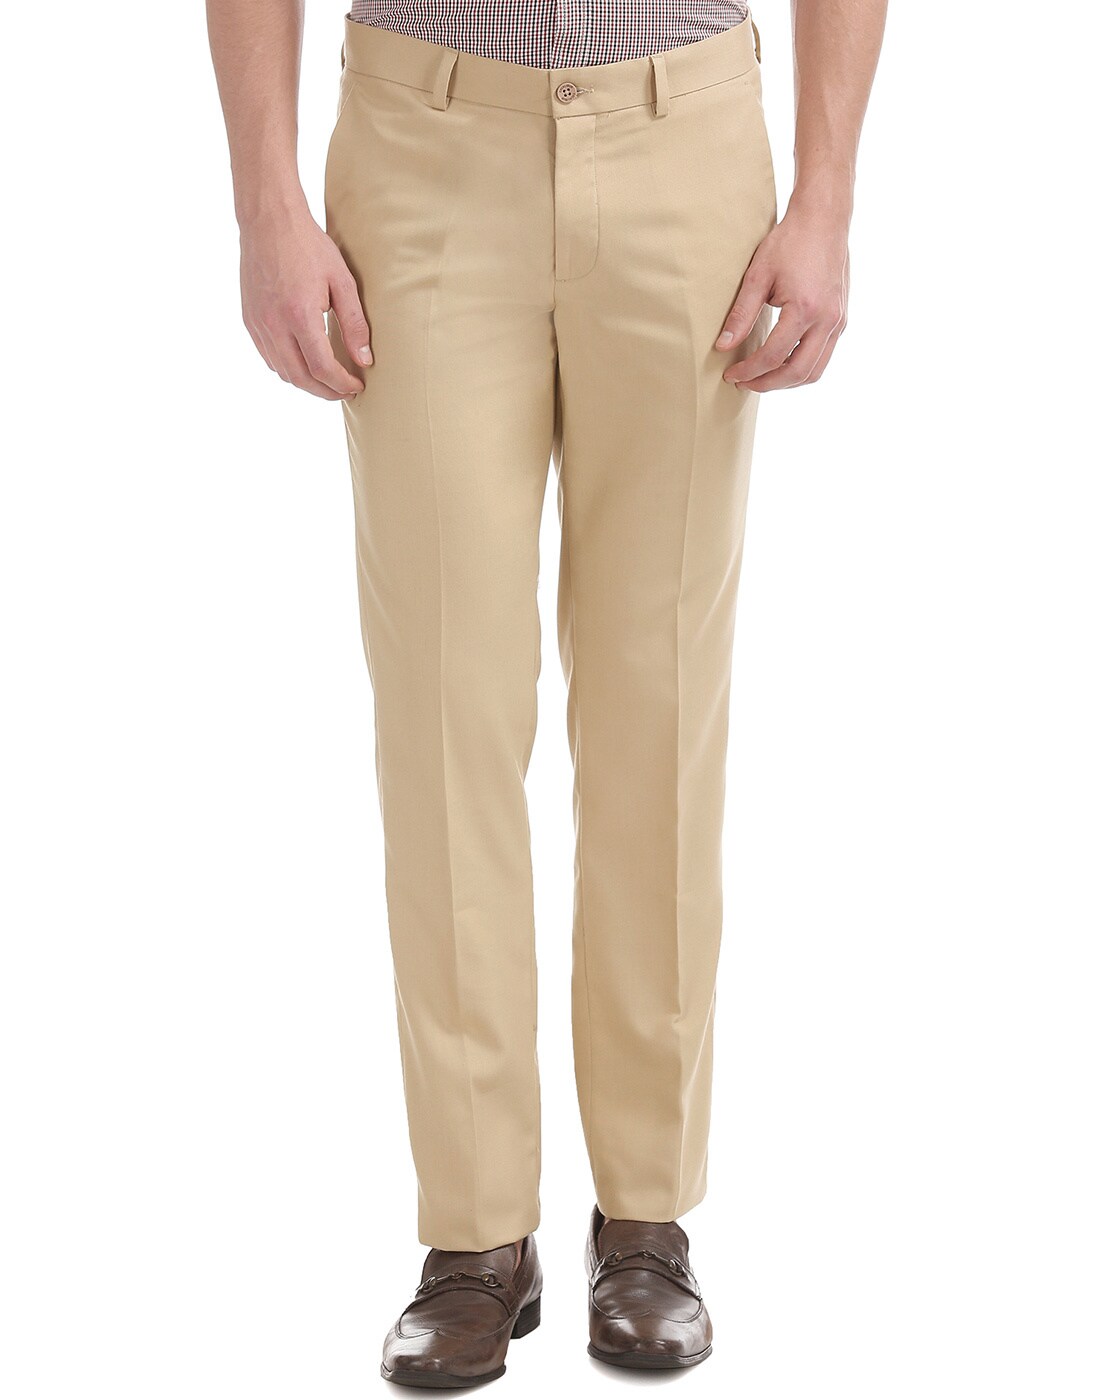 Buy Grey Trousers & Pants for Men by EXCALIBUR Online | Ajio.com